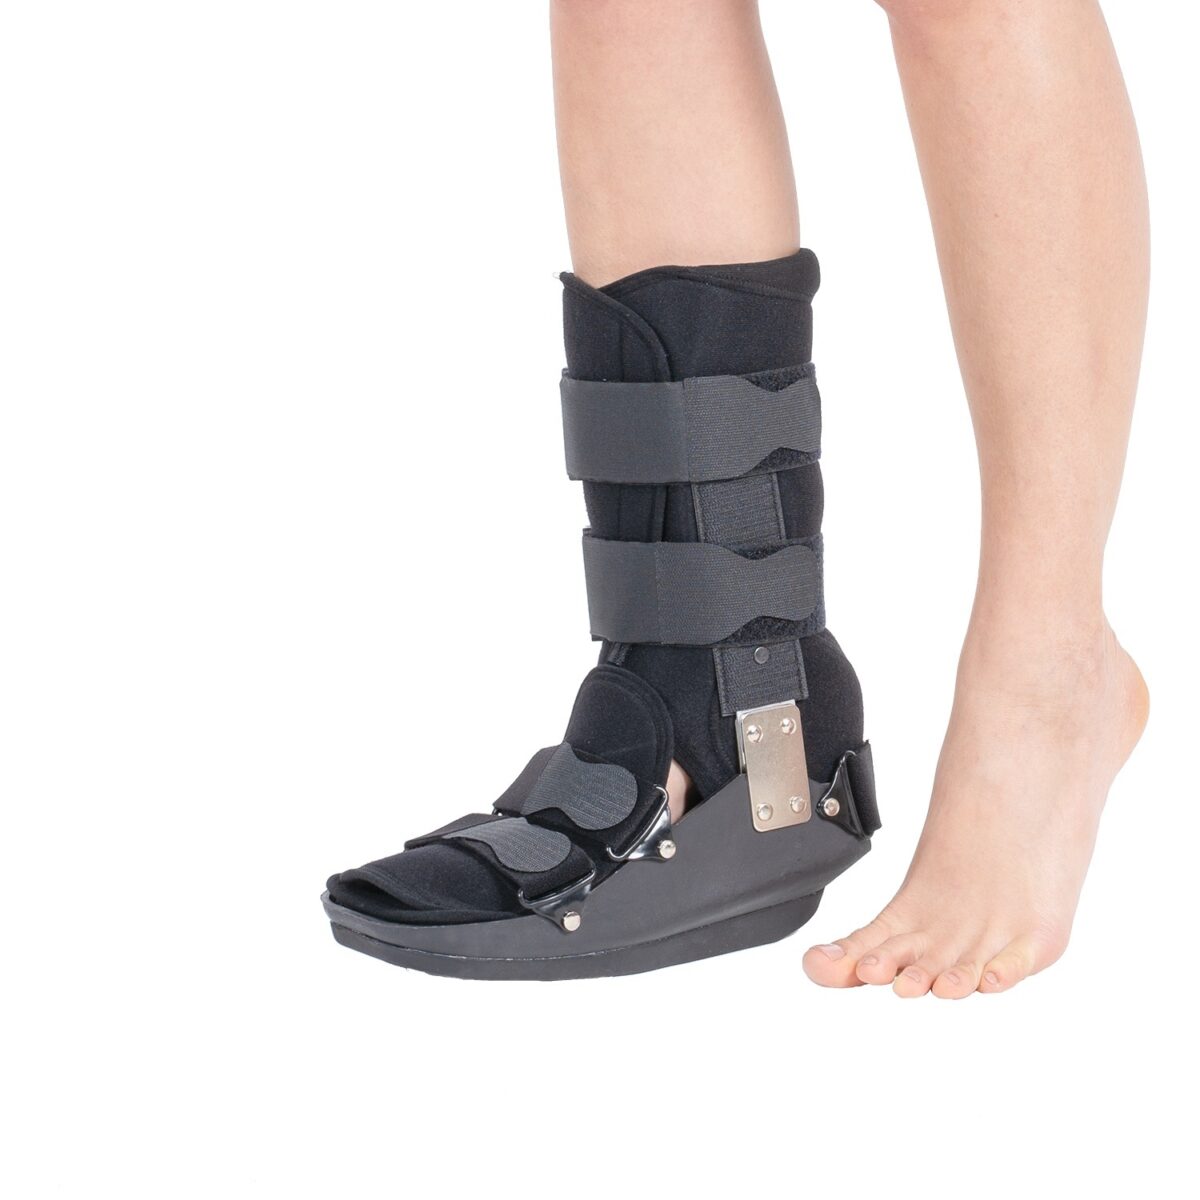 wingmed orthopedic equipments W620 achilles tendon boot short 36